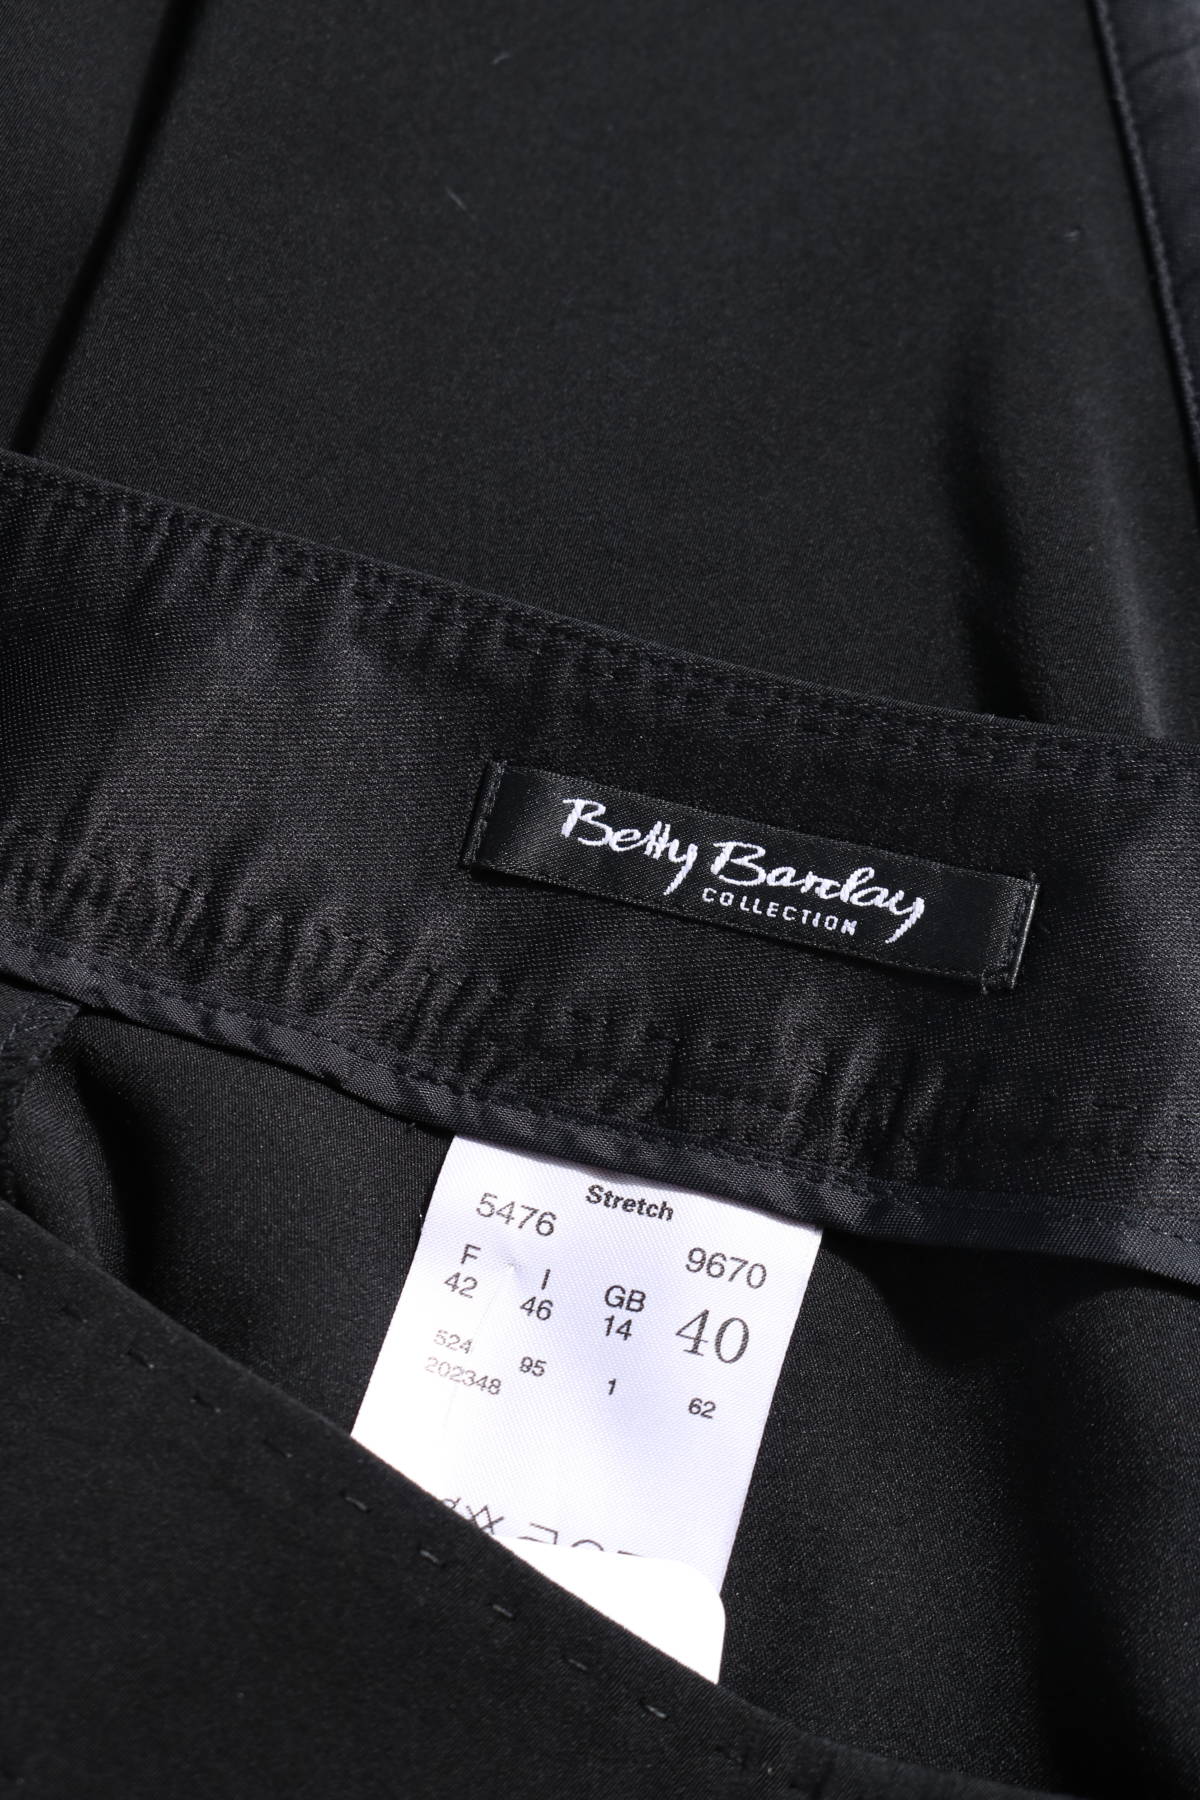 Панталон BETTY BARCLAY3